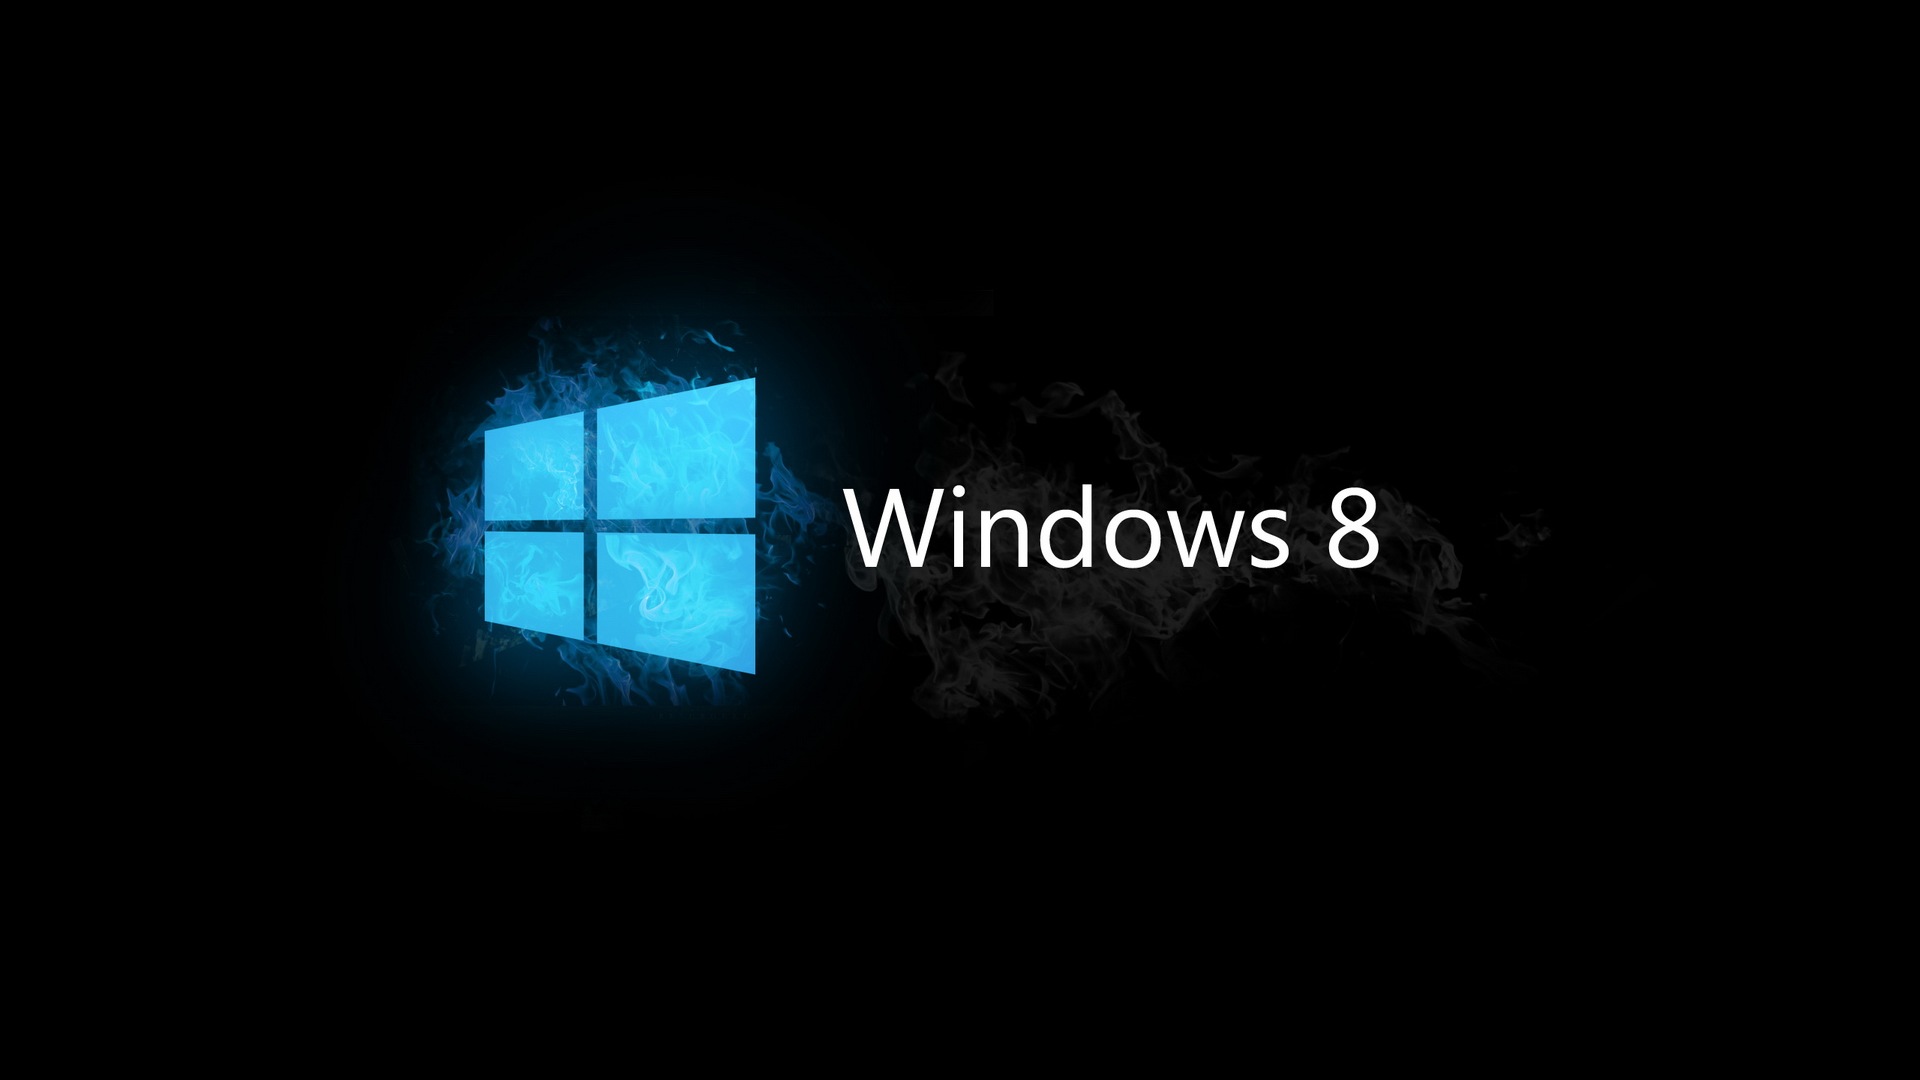 windows 8.1 wallpaper hd,schwarz,dunkelheit,blau,weiß,text